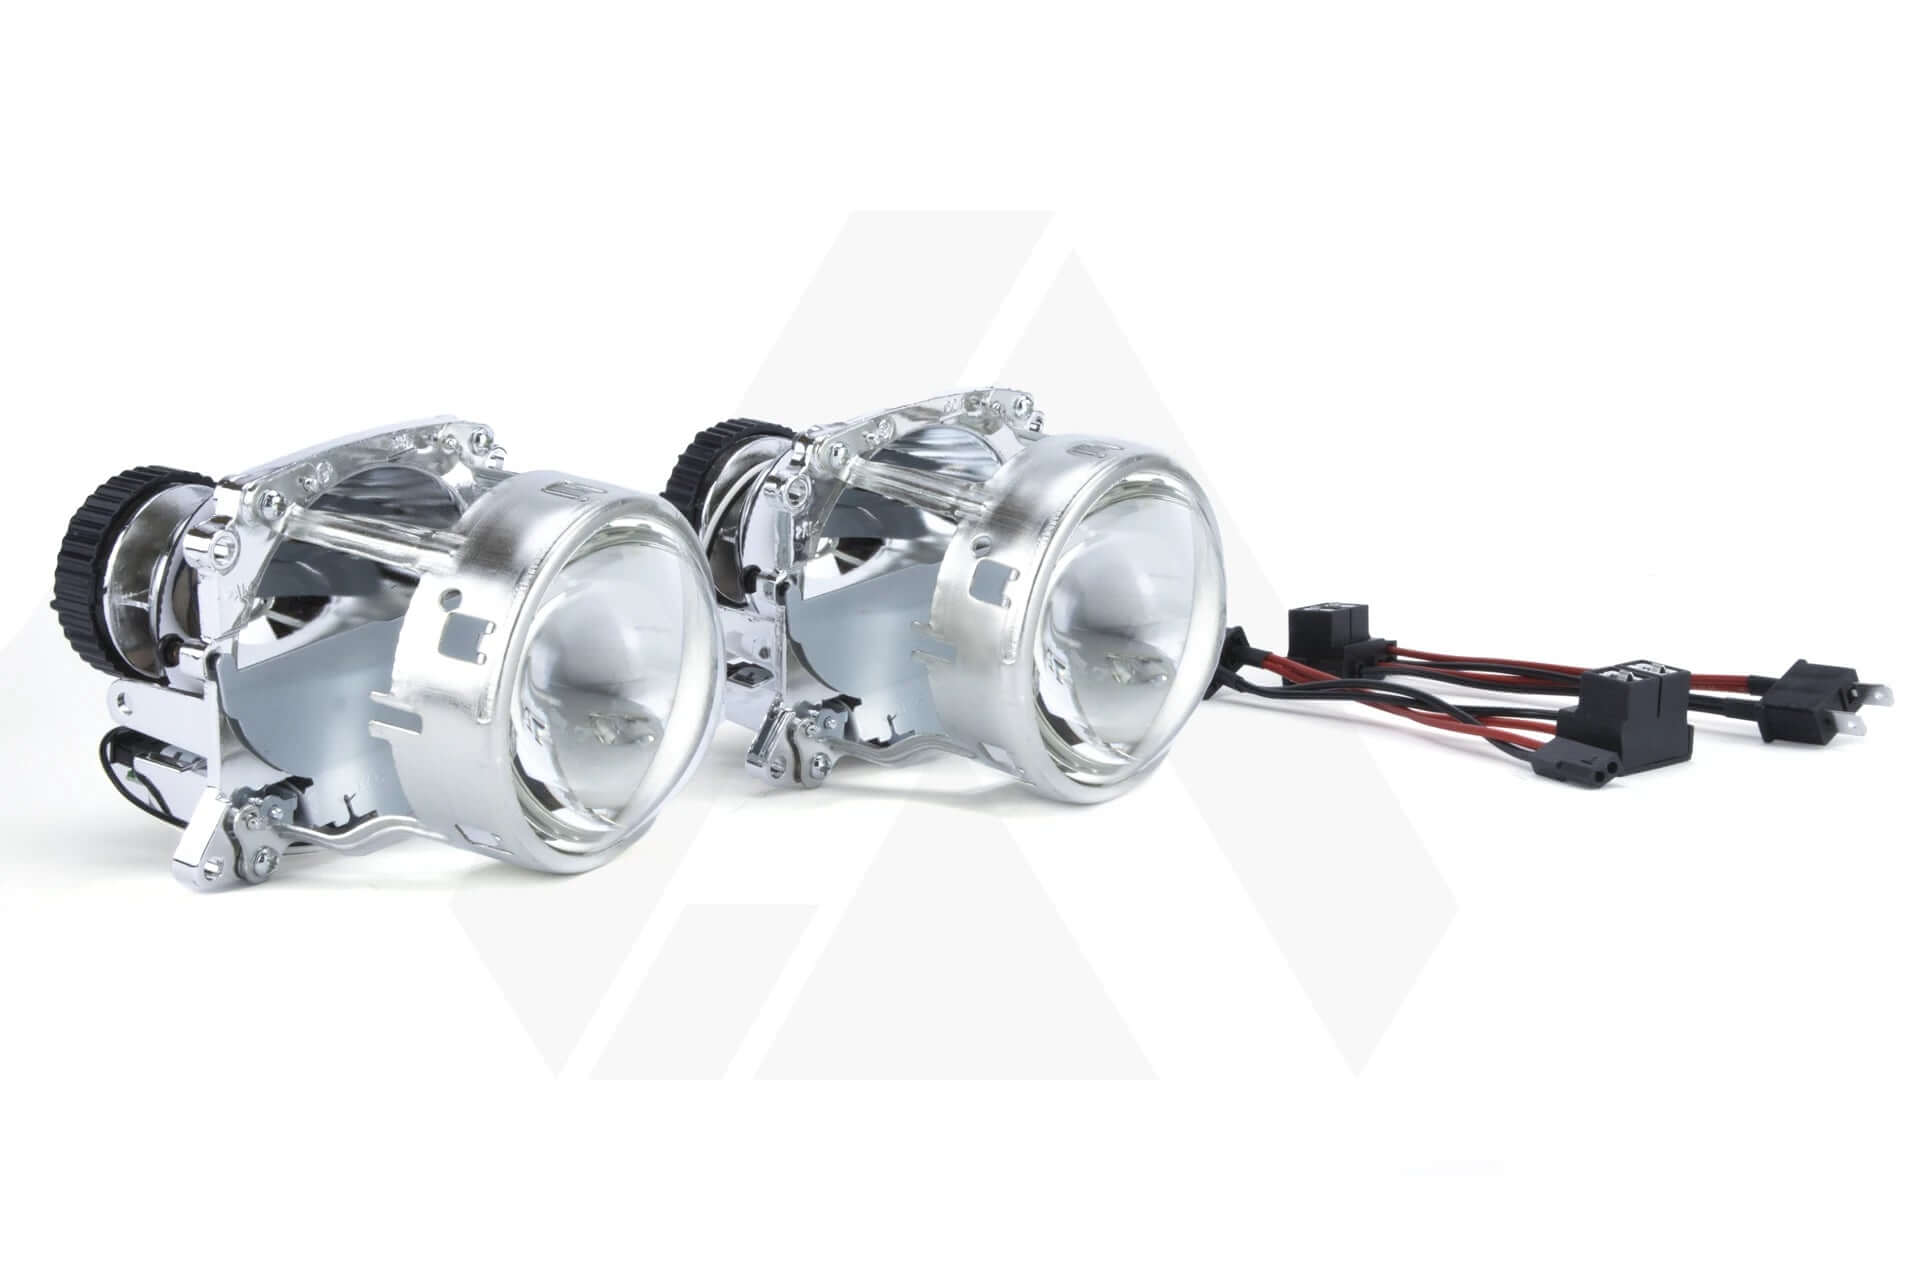 Mercedes CL C216 07-14 bi-xenon headlight repair & upgrade kit for D1S headlights